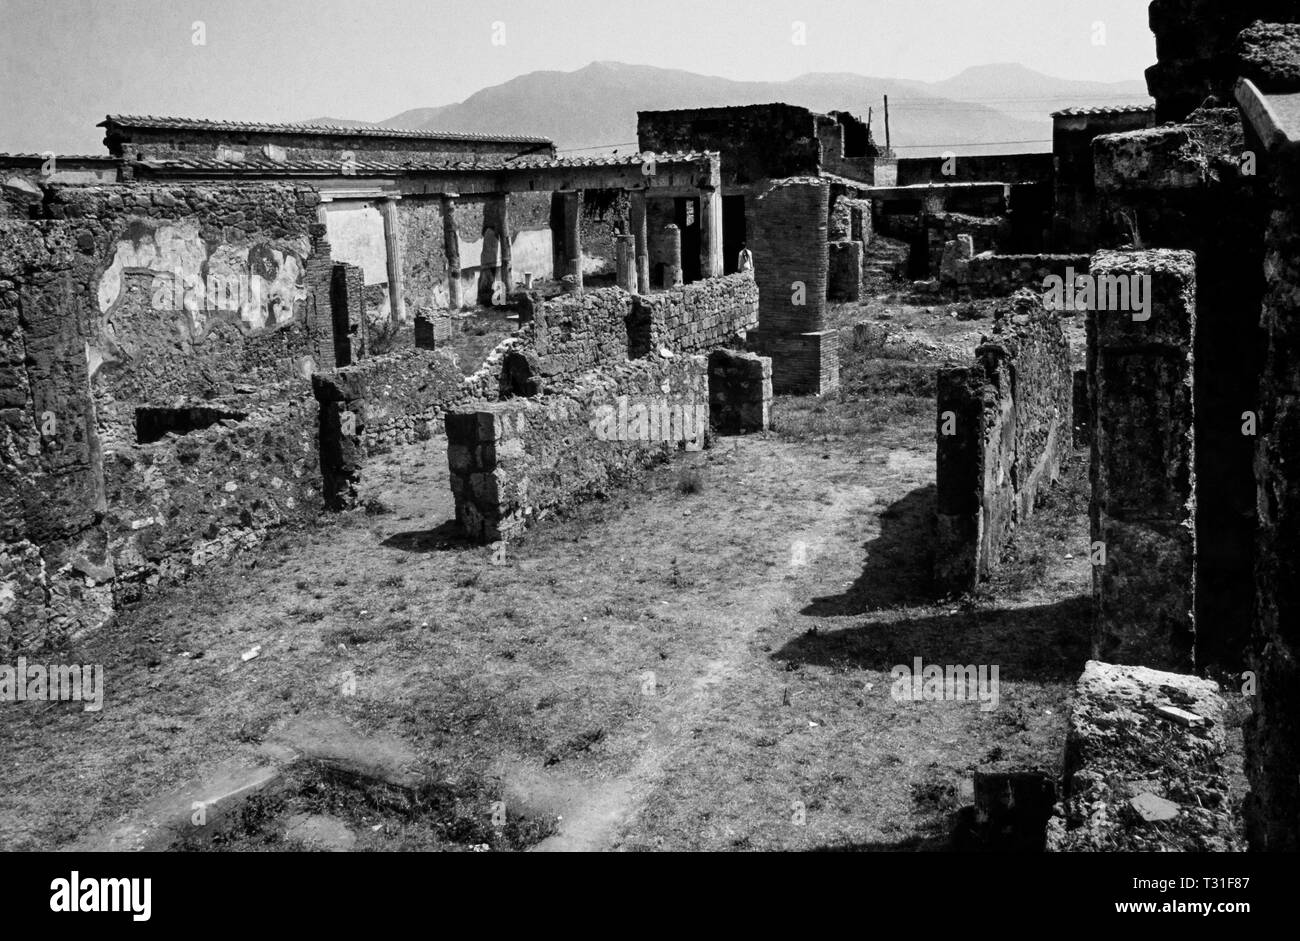 Destruction of pompeii Black and White Stock Photos & Images - Alamy